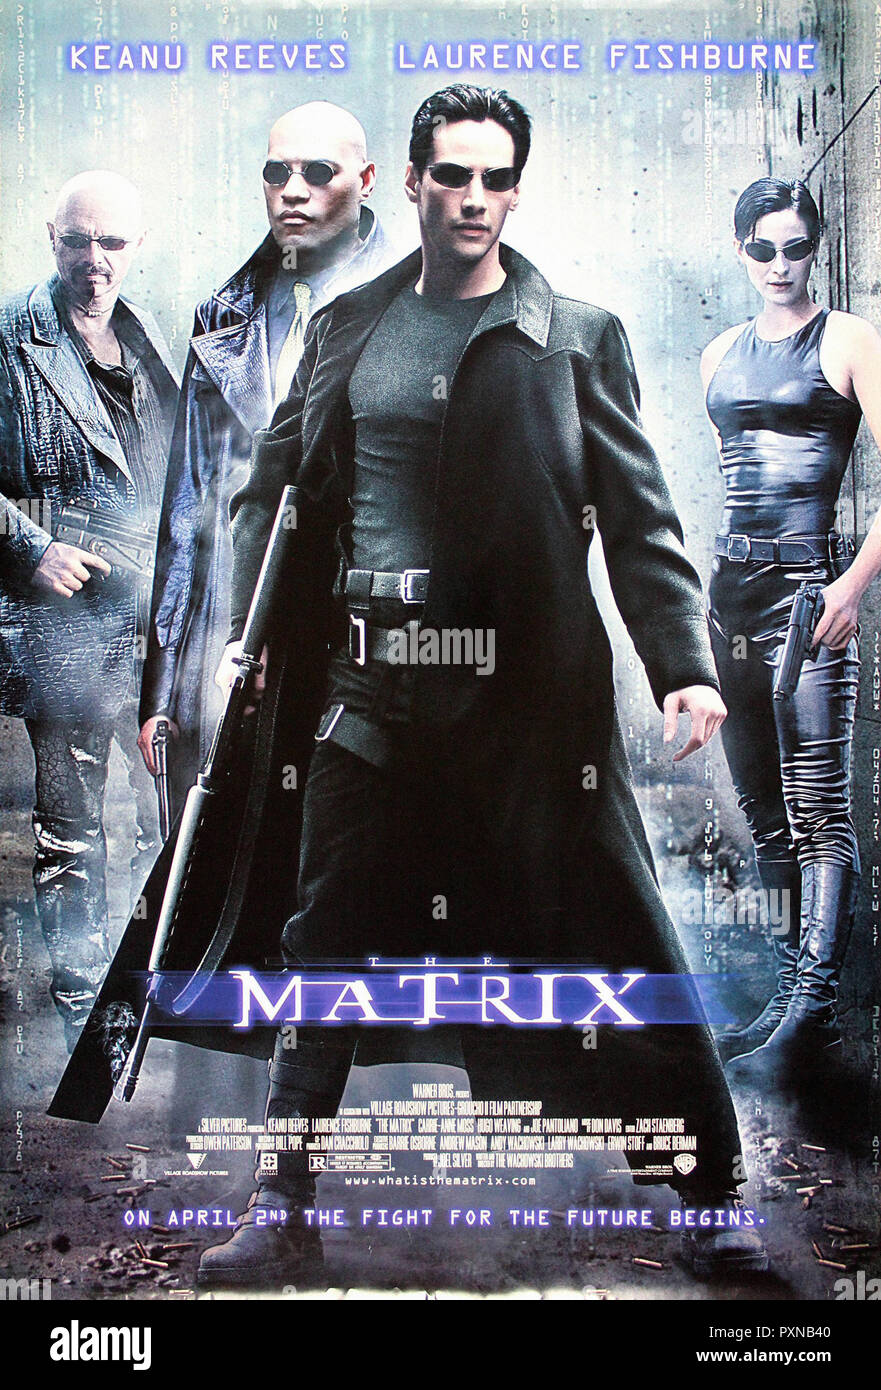 Matrix - Original movie poster Stock Photo